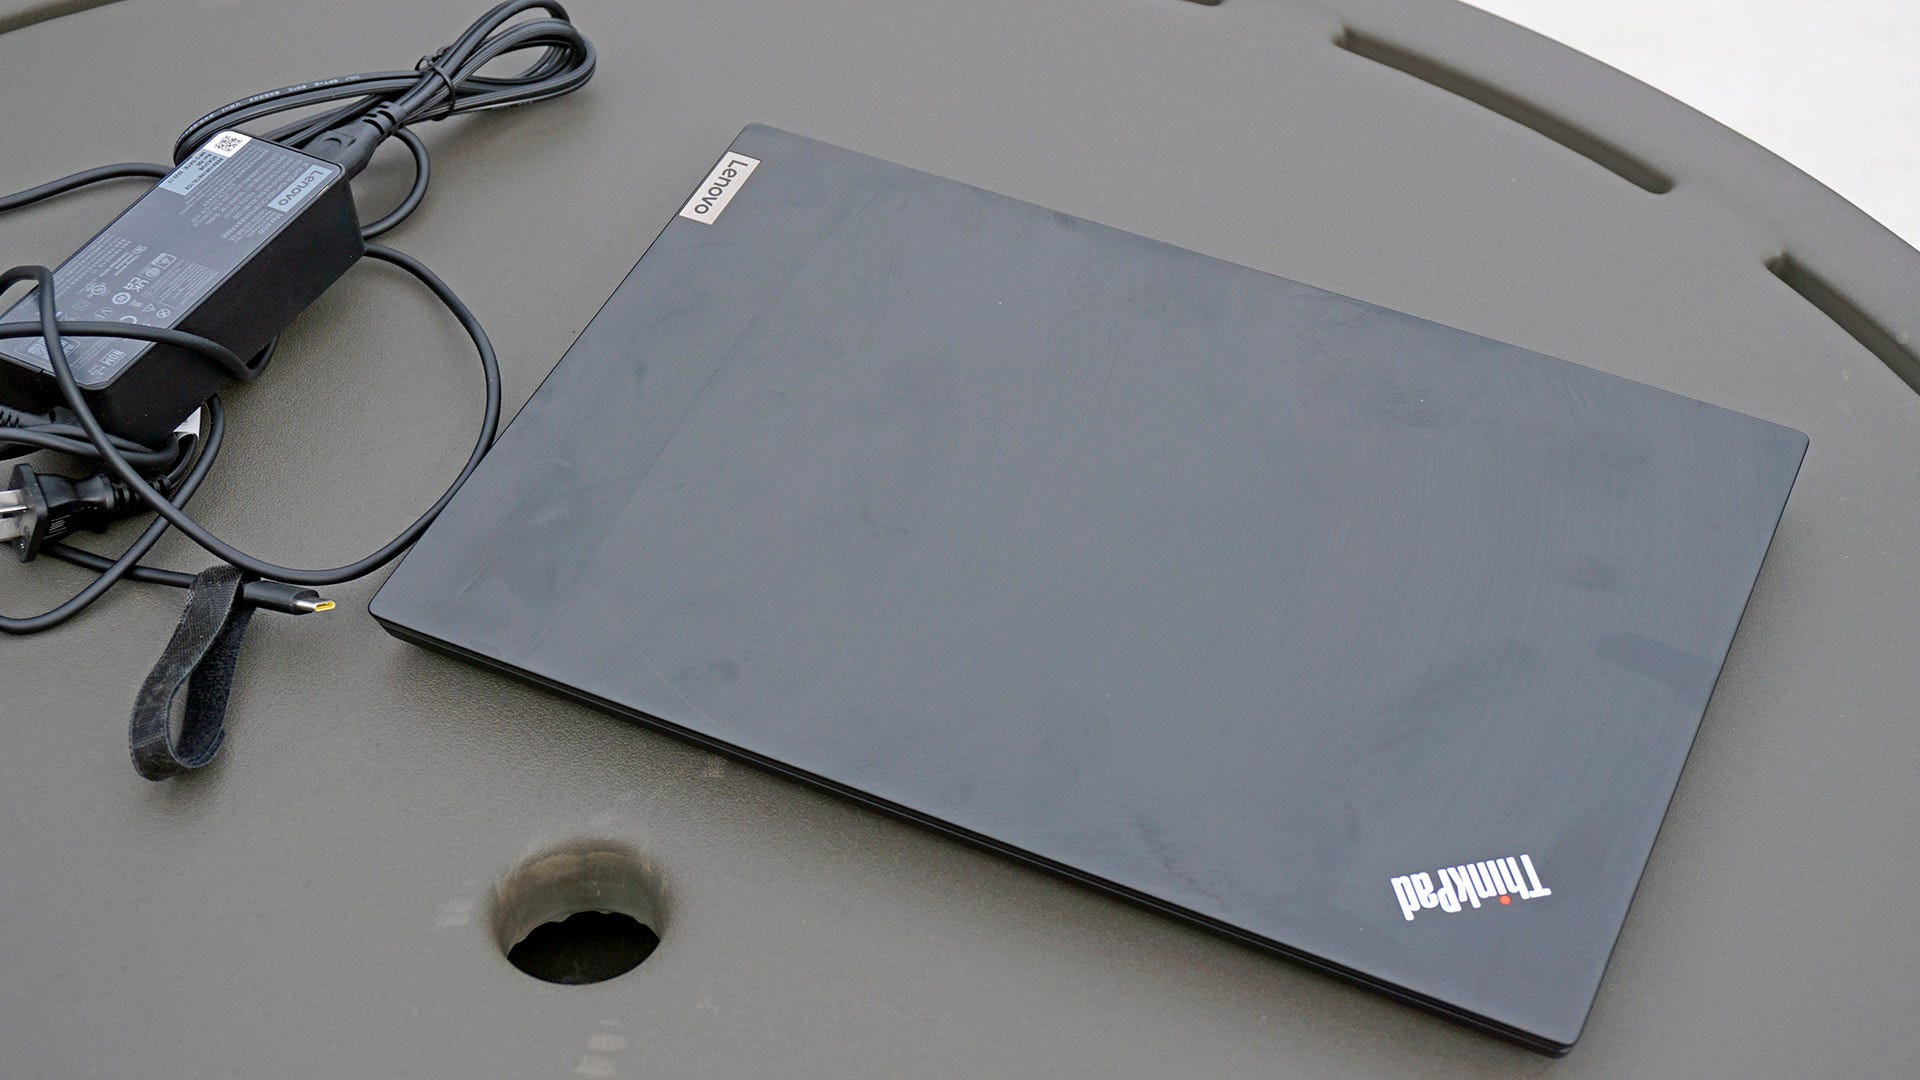 ThinkPad E14 met netsnoer